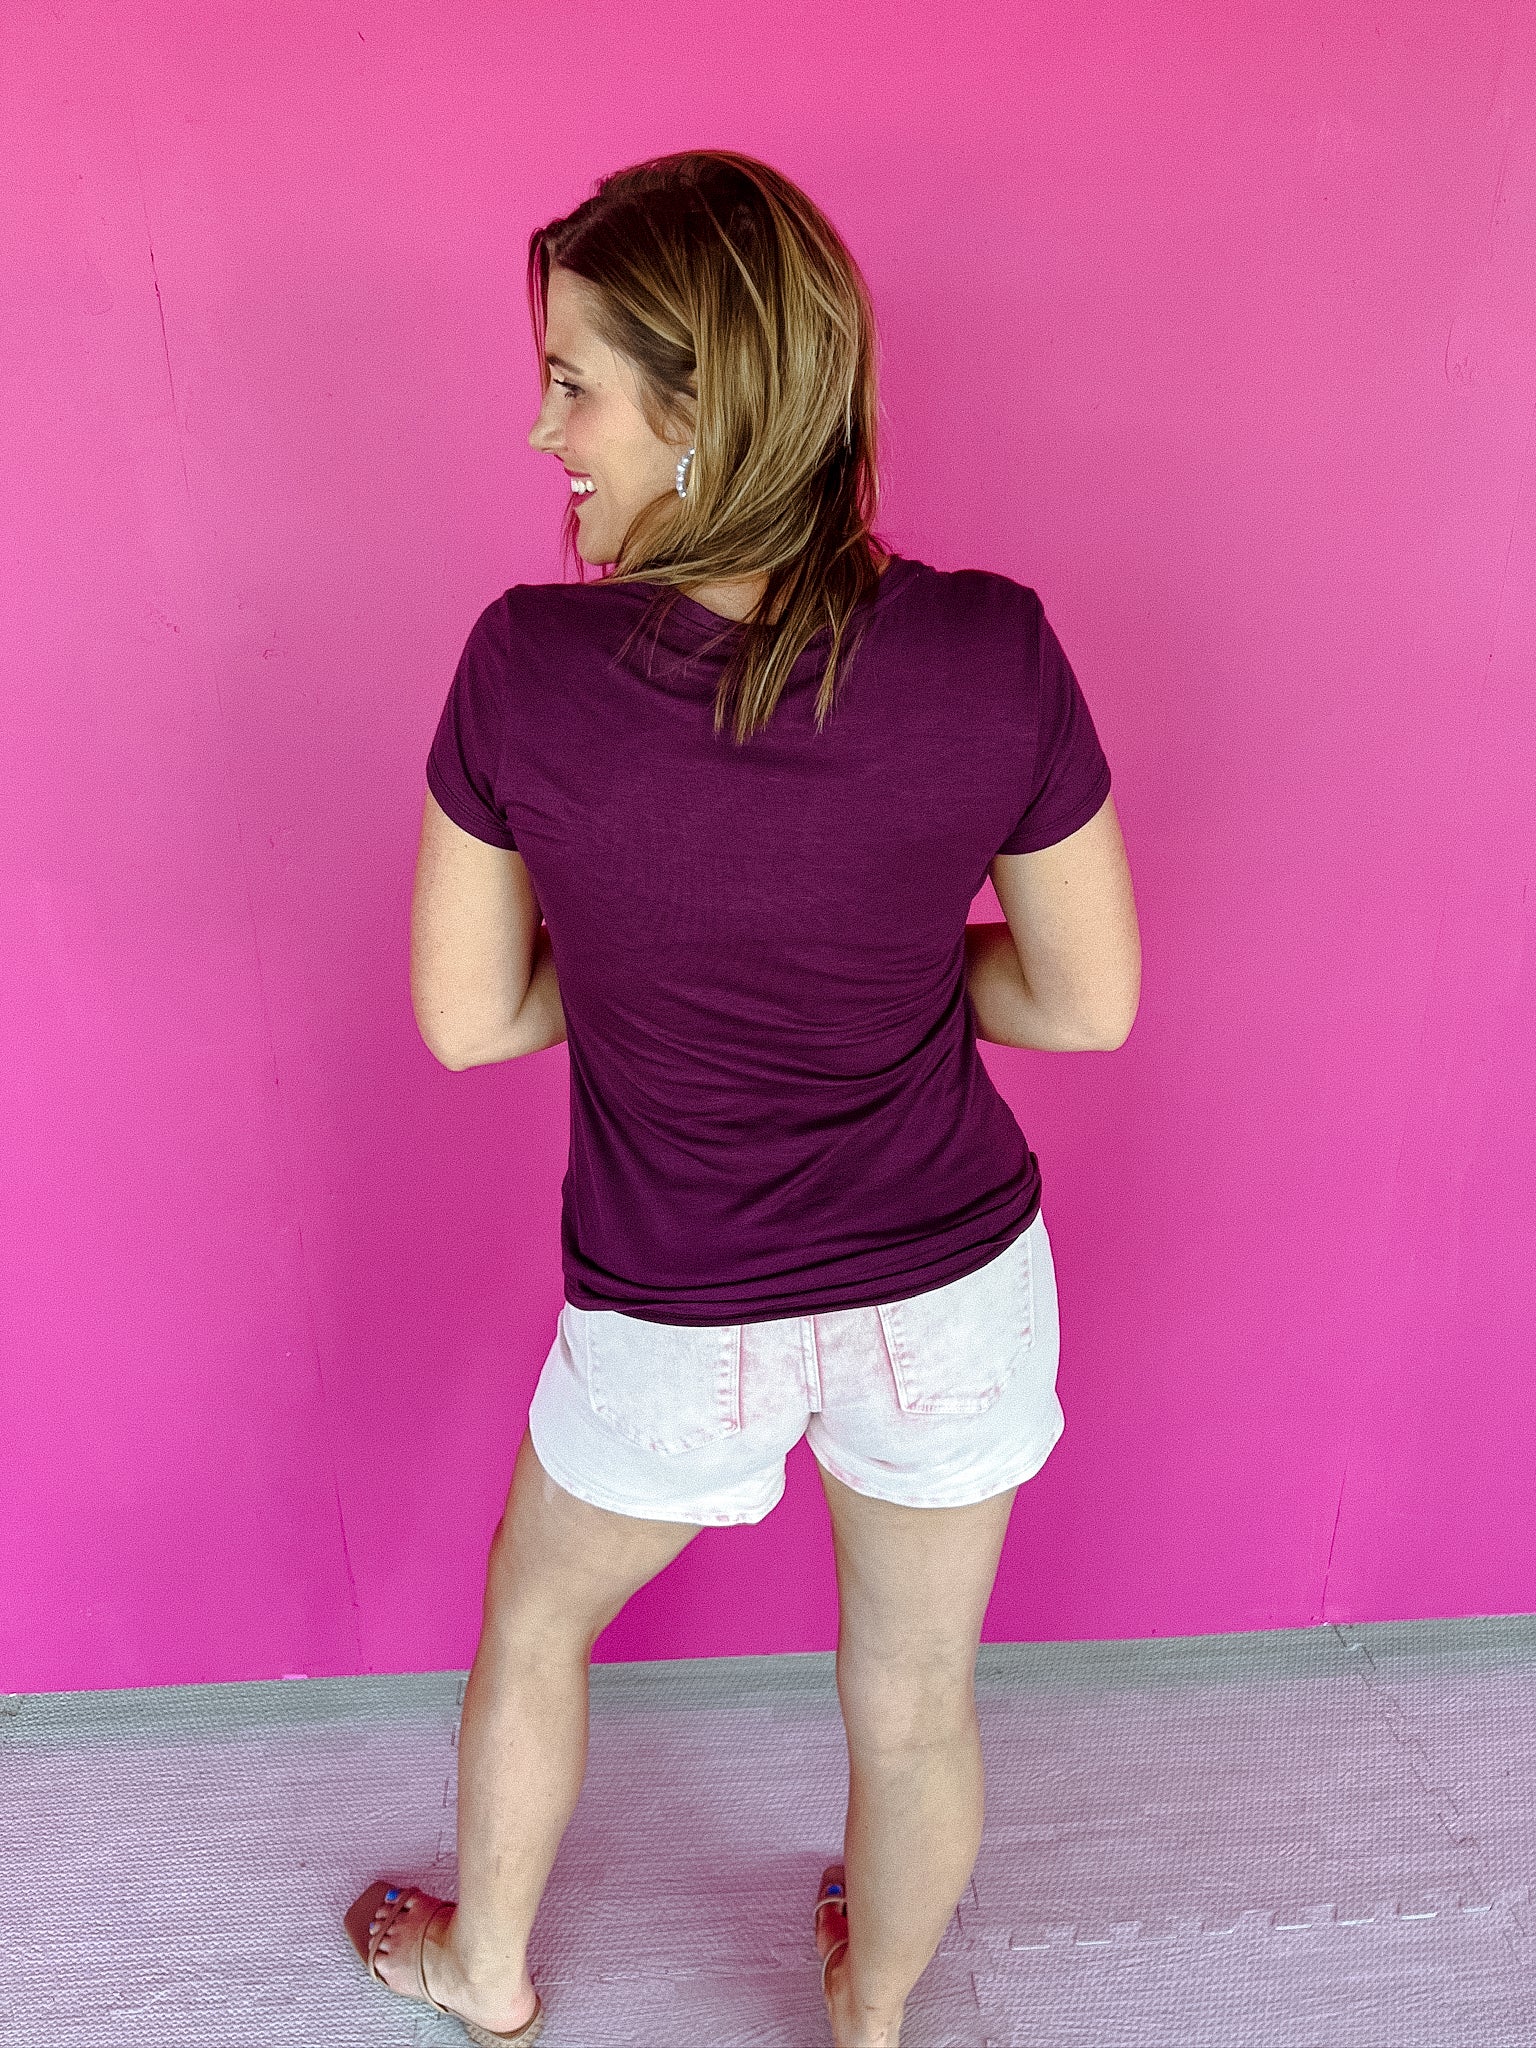 Alisha Cuffed Shorts - Faded Pink